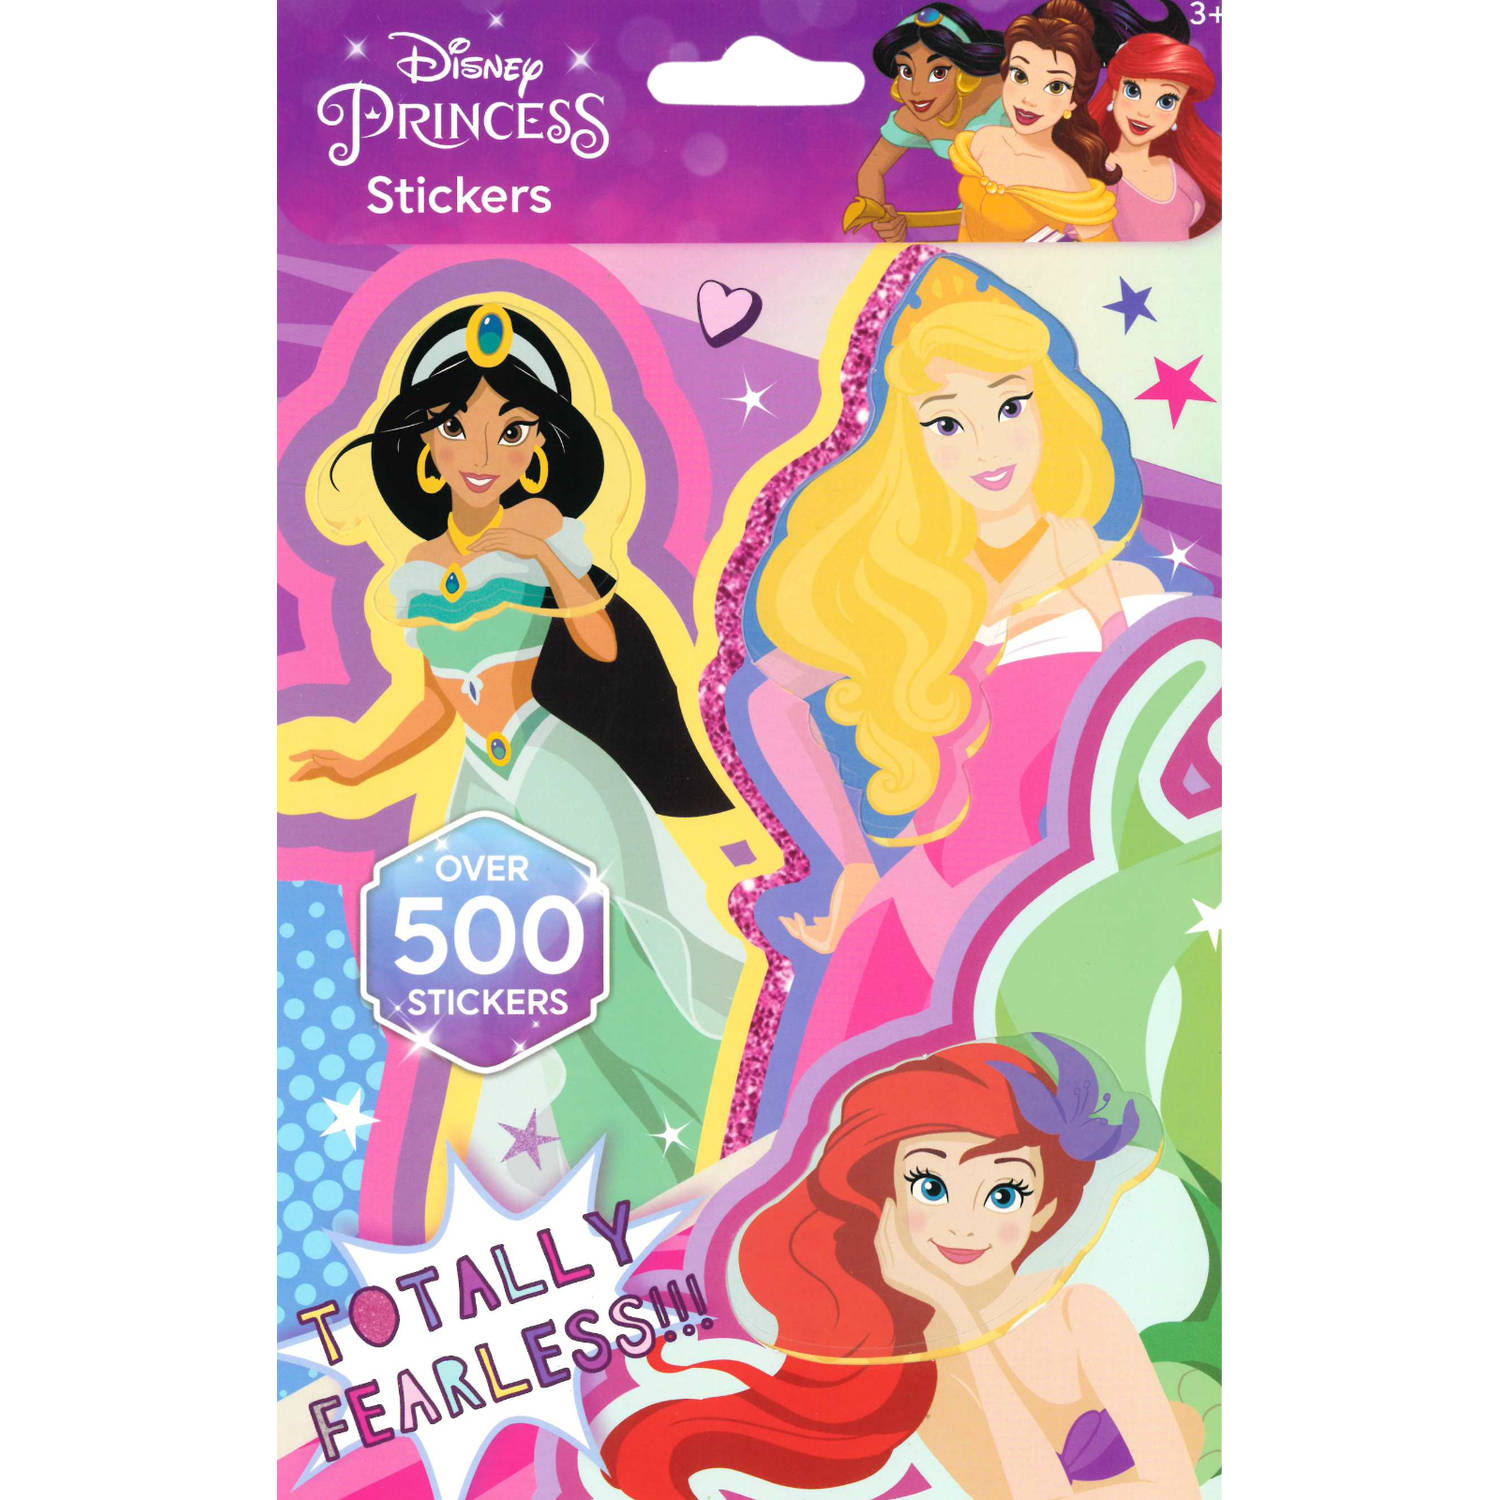 Disney Princess Prinsessen Stickers Meer dan 500 Stickers